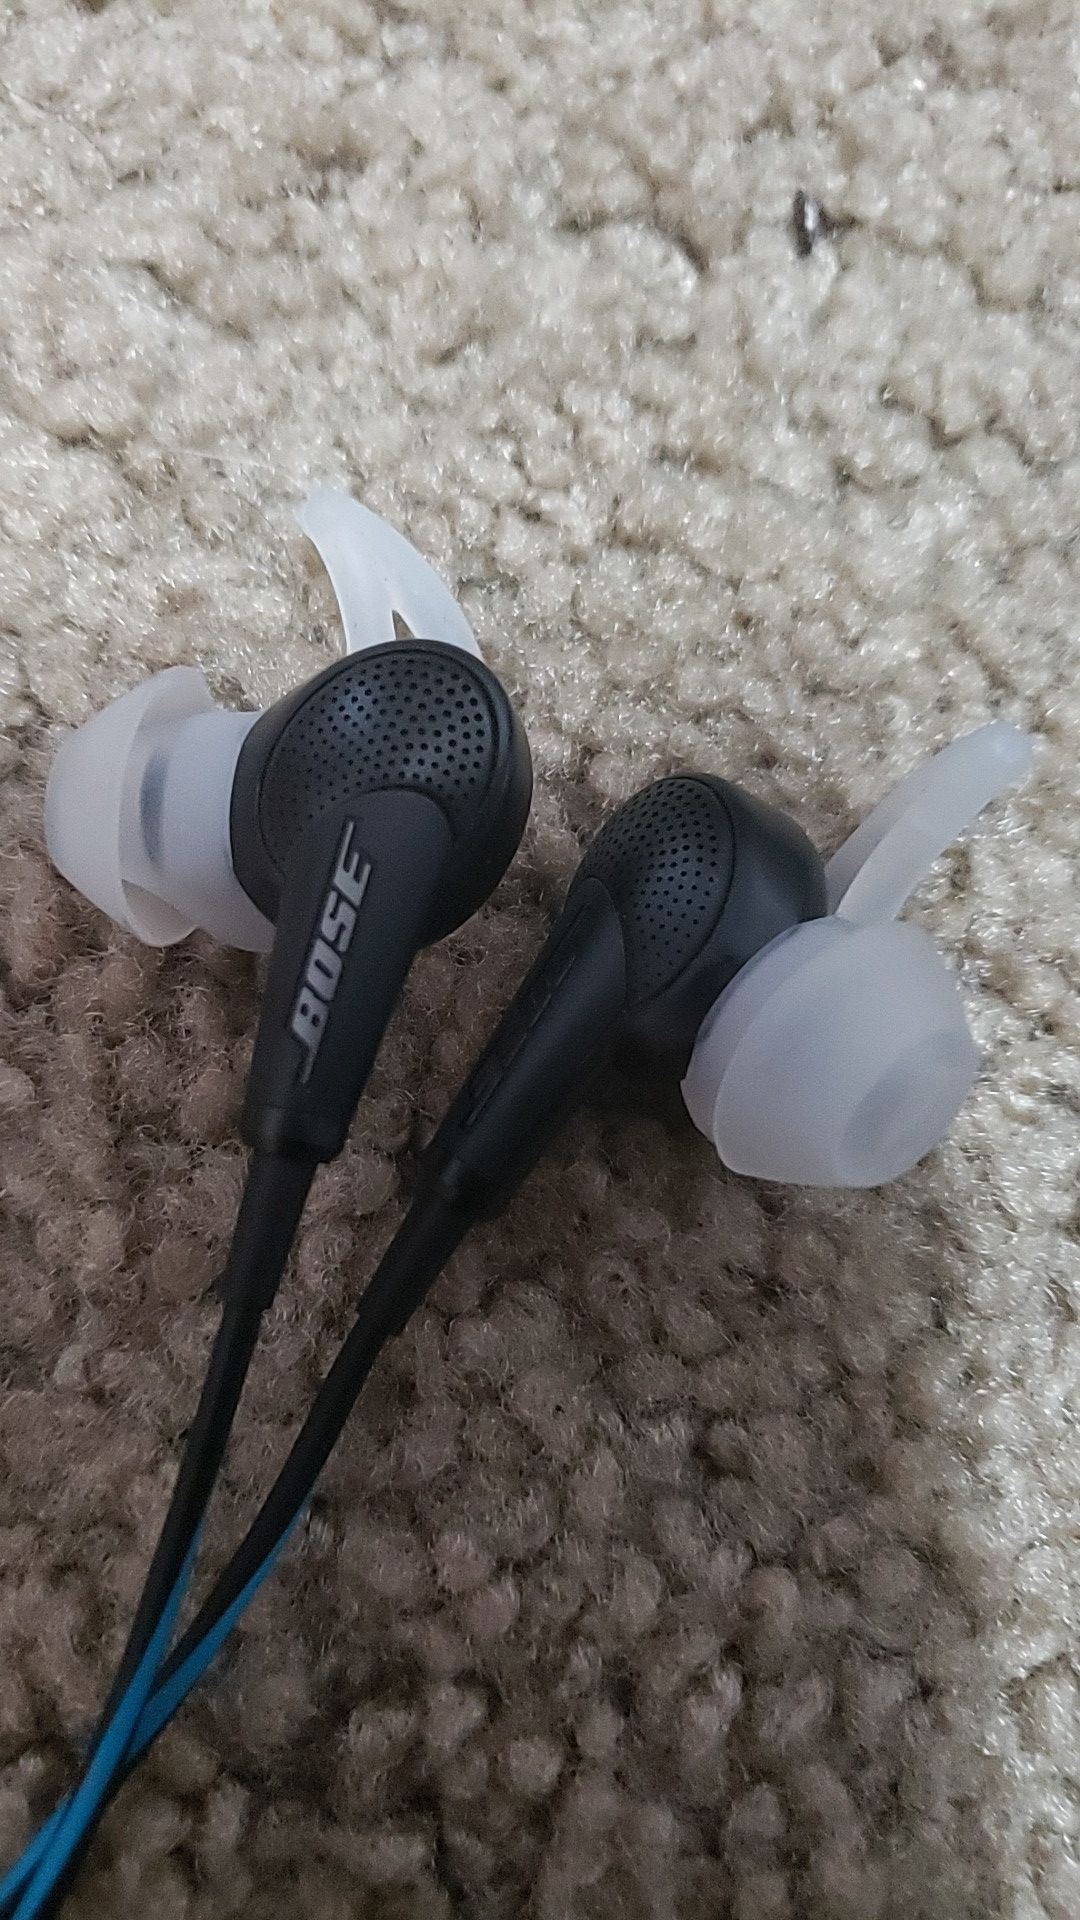 Bose QC 20 earbuds